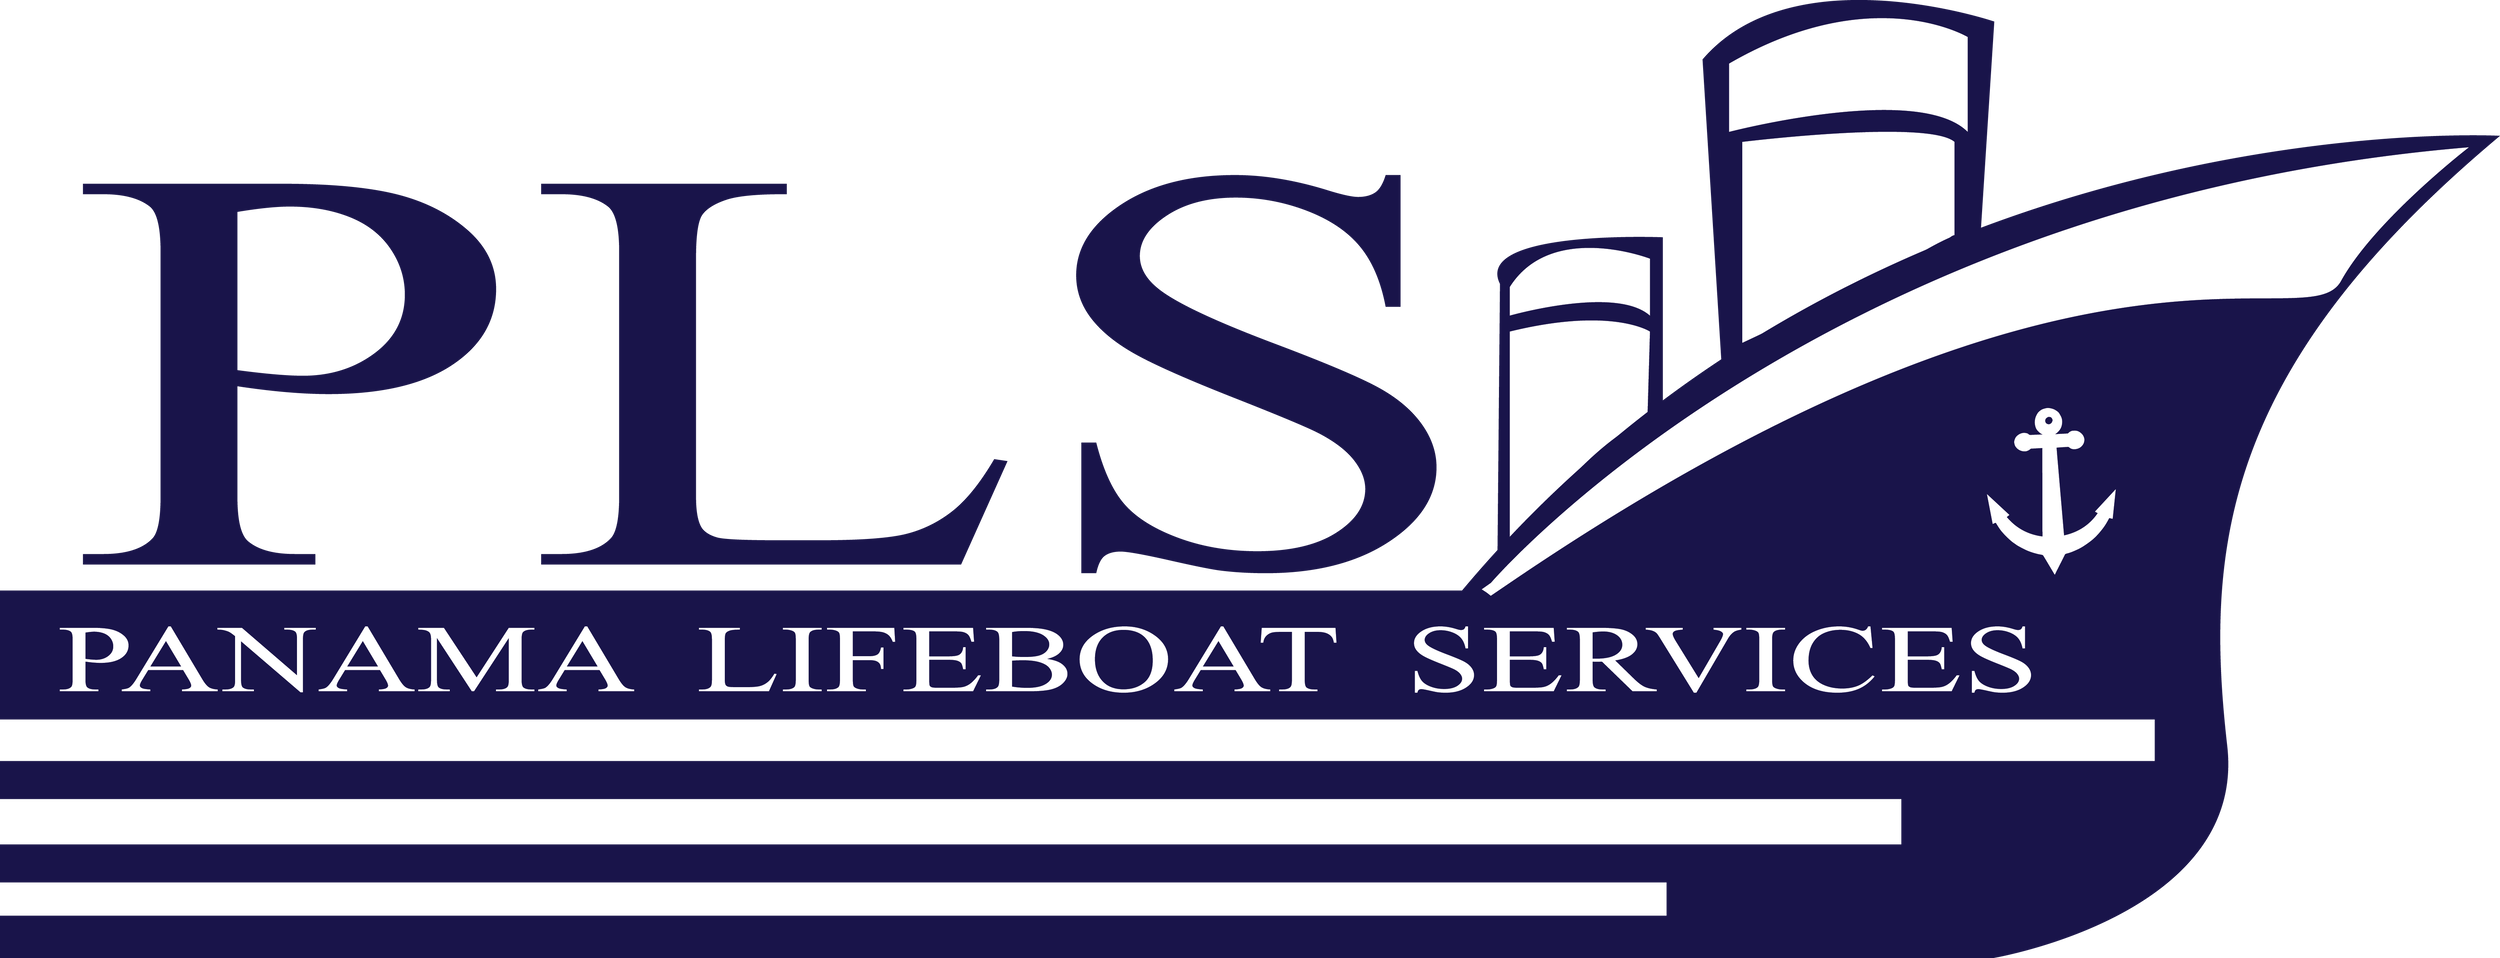 Panama Lifeboat Services Logo